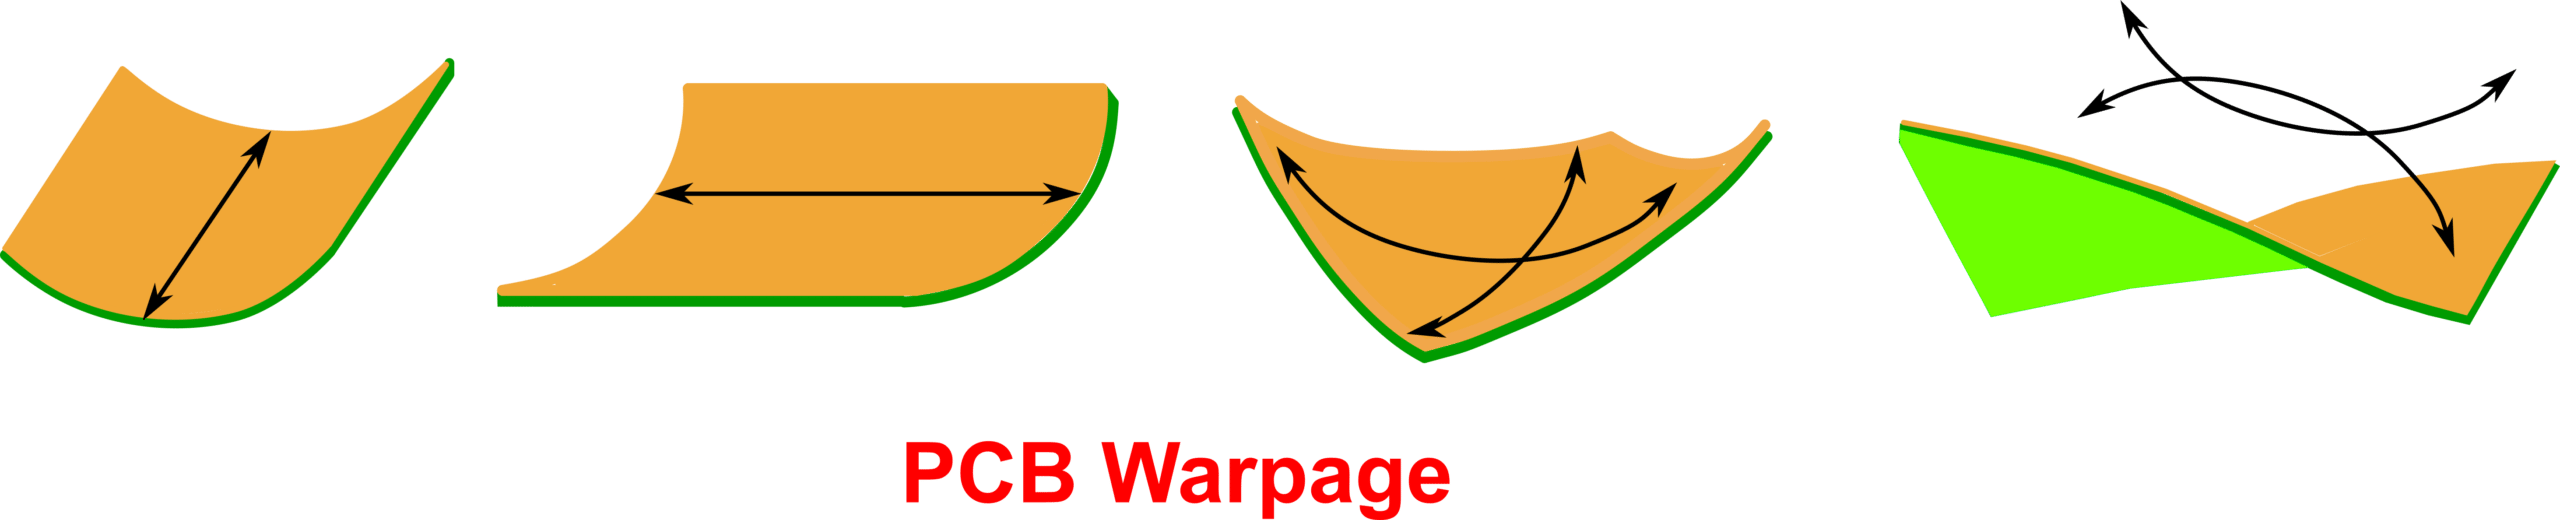 PCB warpage